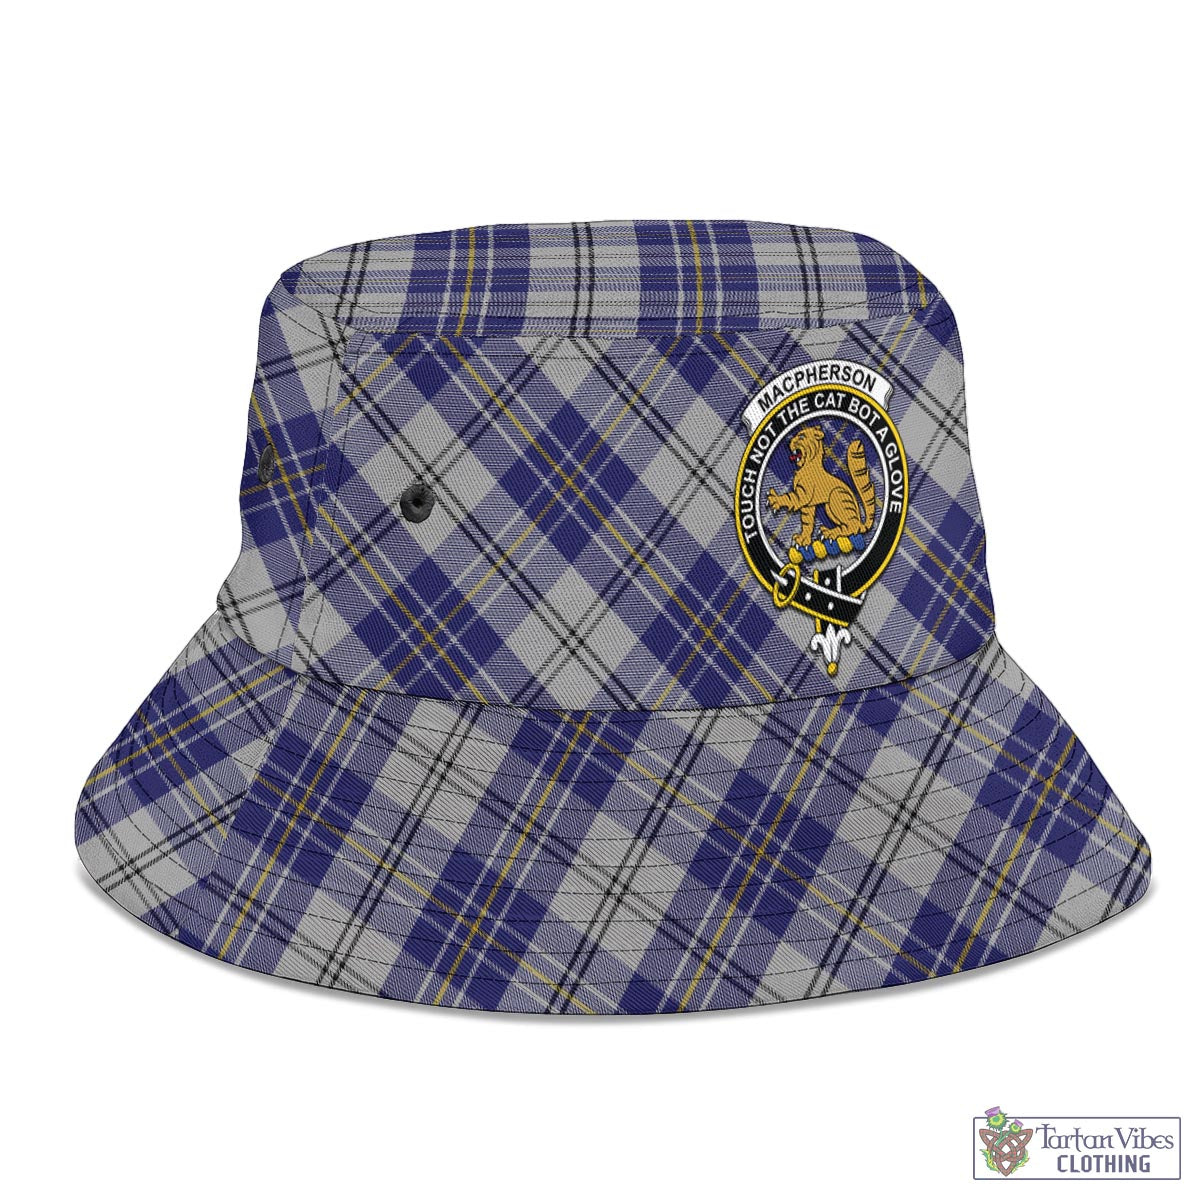 Tartan Vibes Clothing MacPherson Dress Blue Tartan Bucket Hat with Family Crest